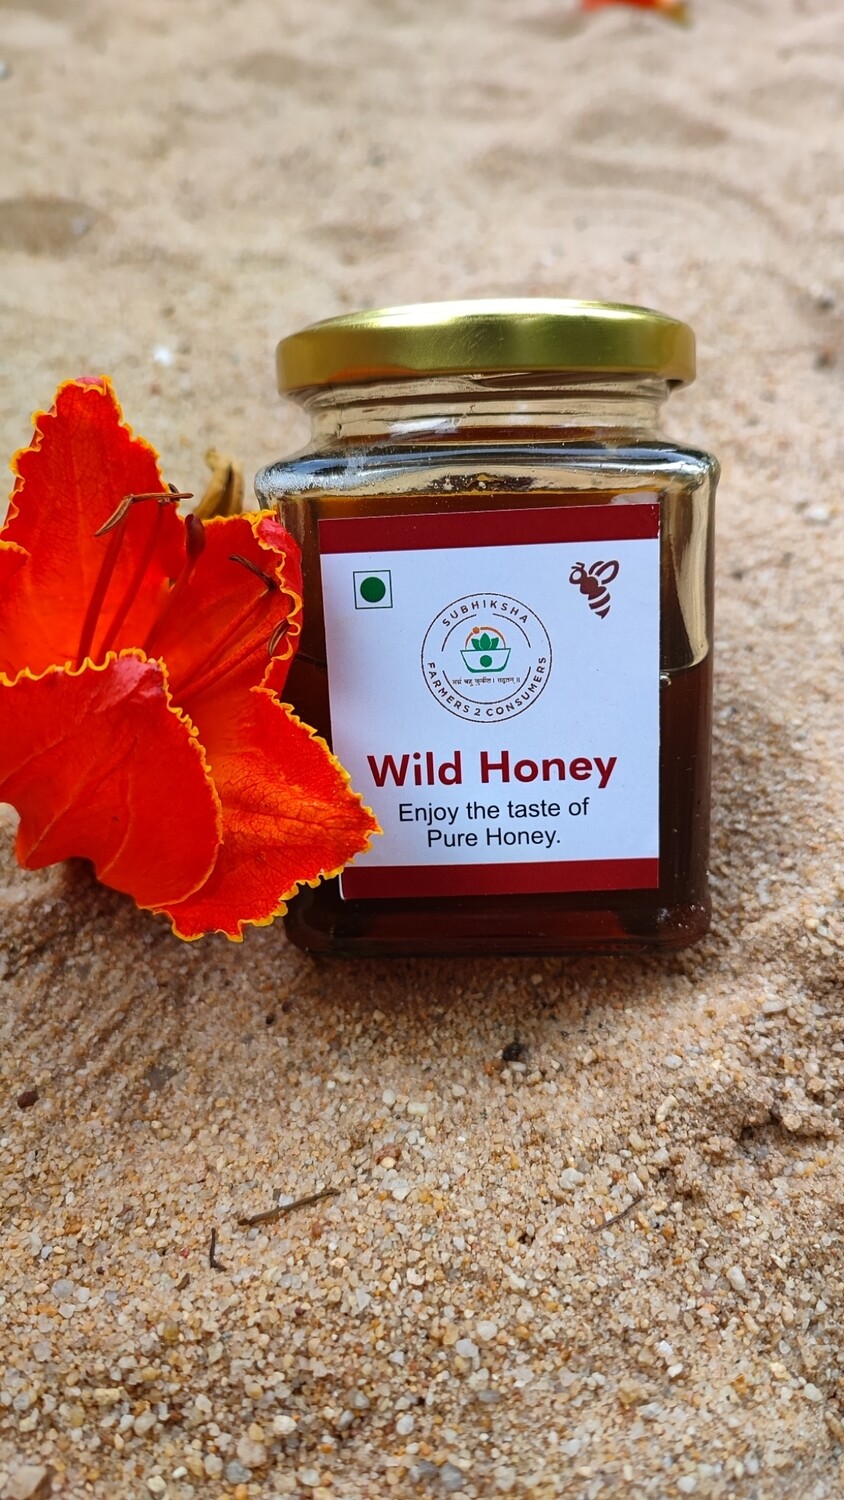 Wild Honey (ಕಾಡು ಜೇನು)